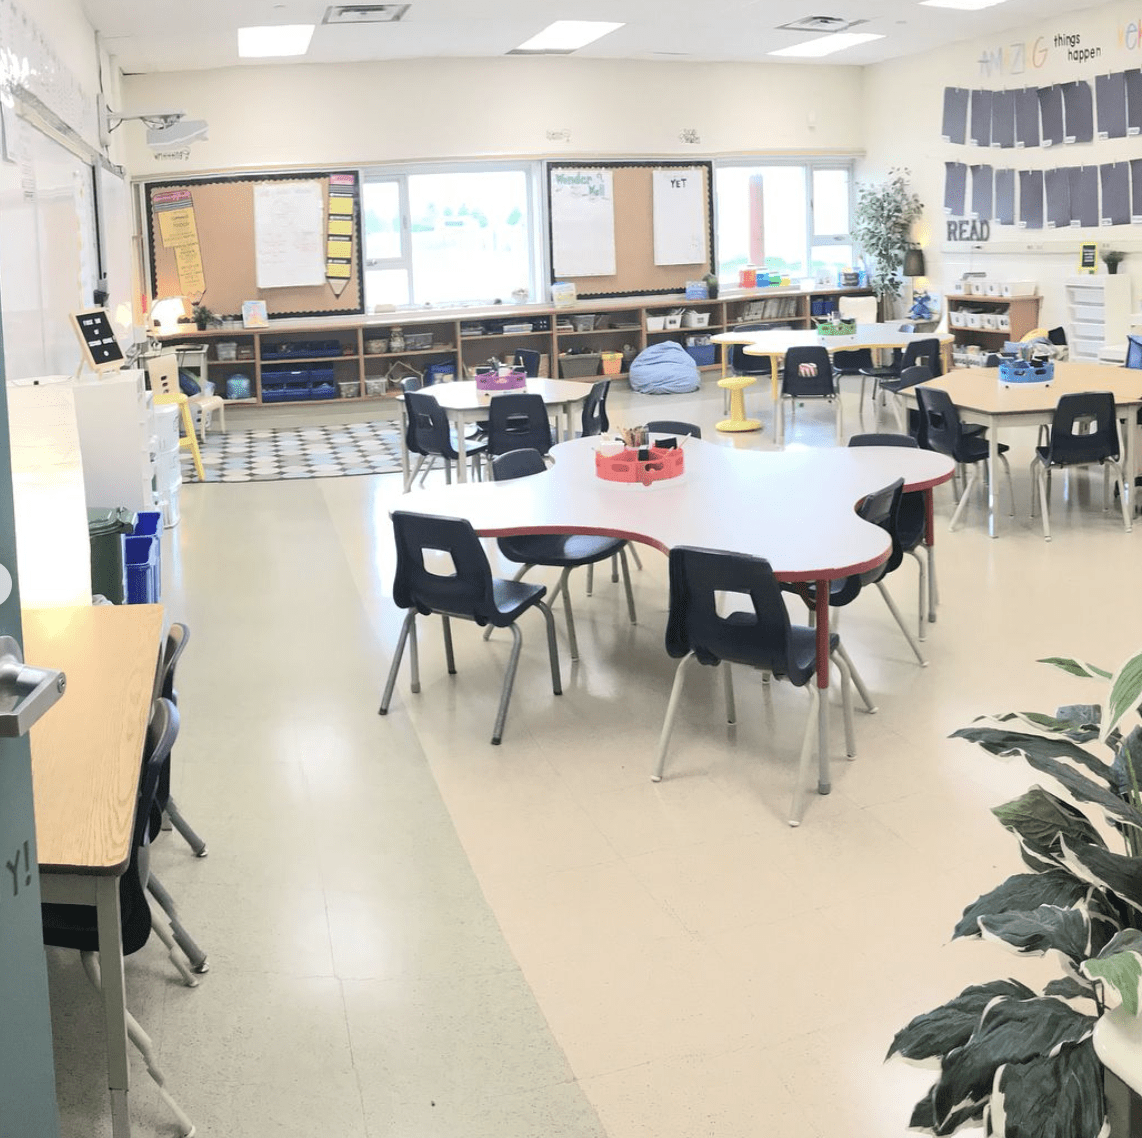 Finished classroom setup after photo